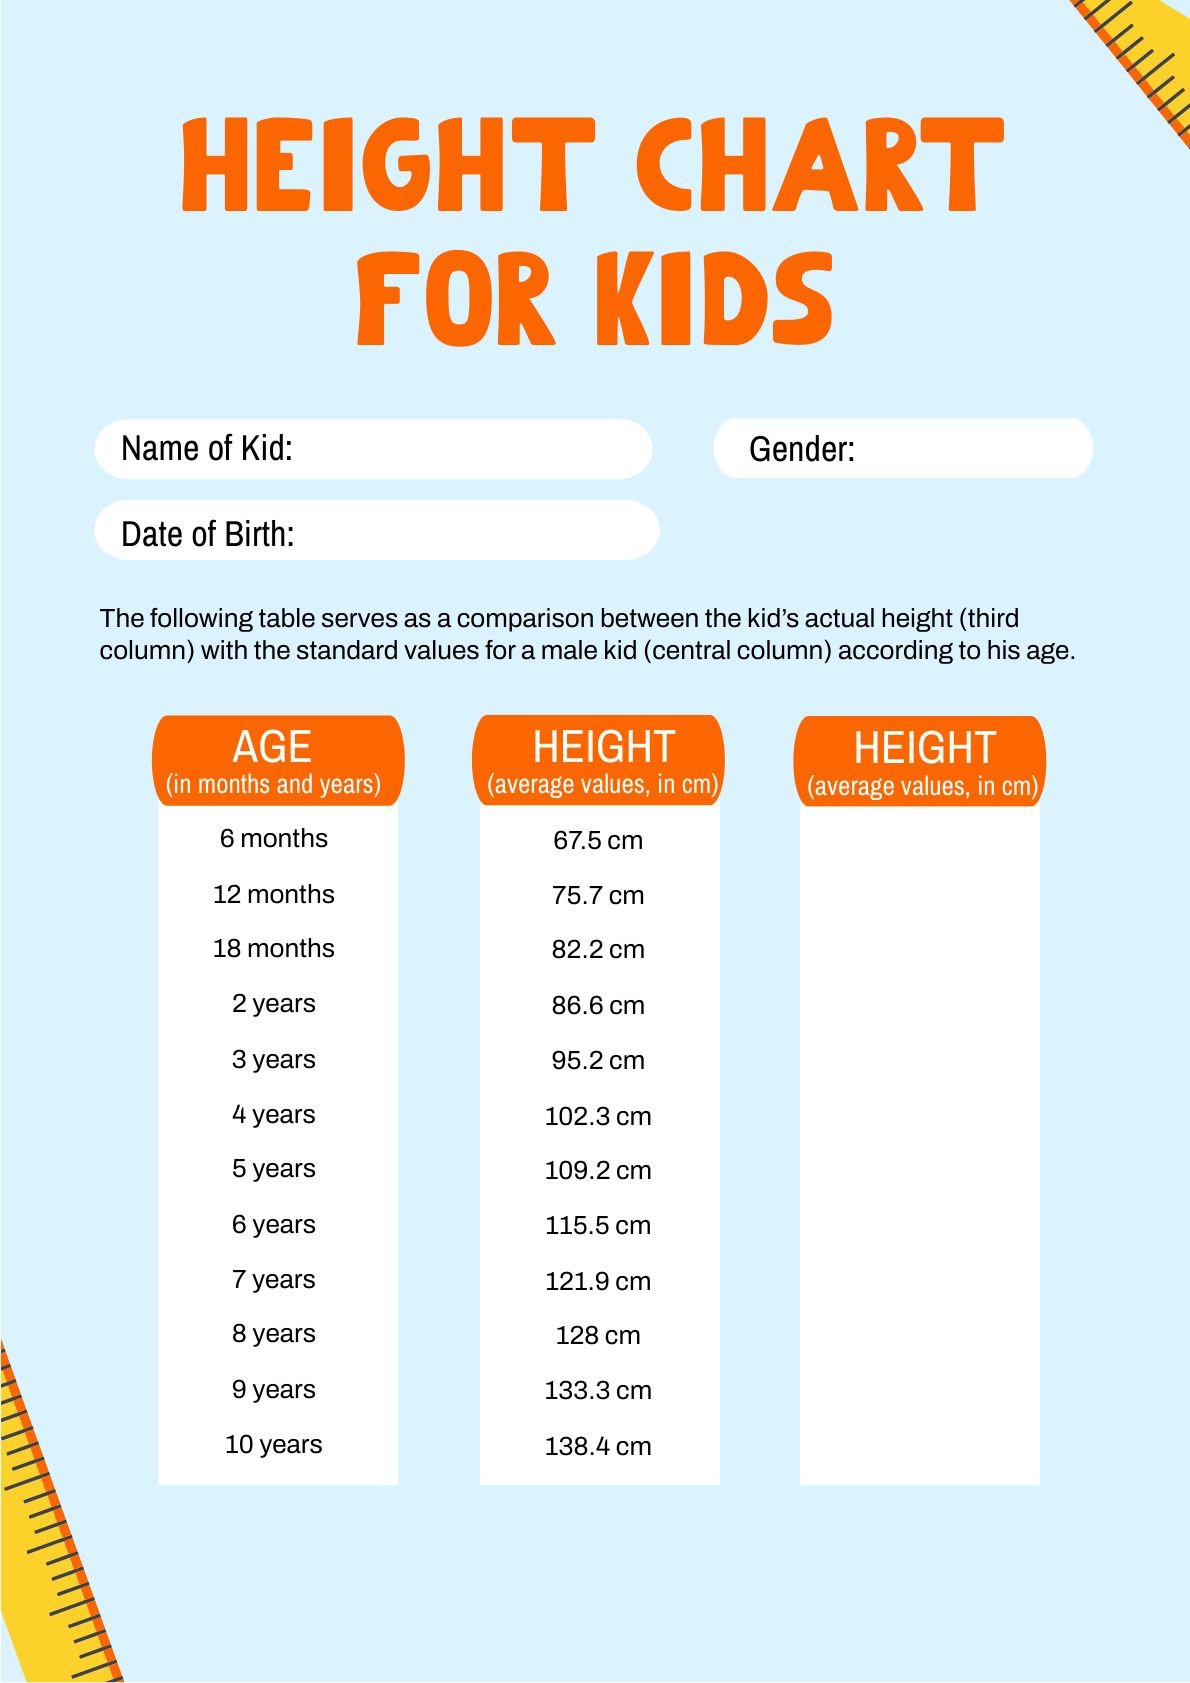 https://images.template.net/107272/height-chart-for-kids-epi7t.jpeg